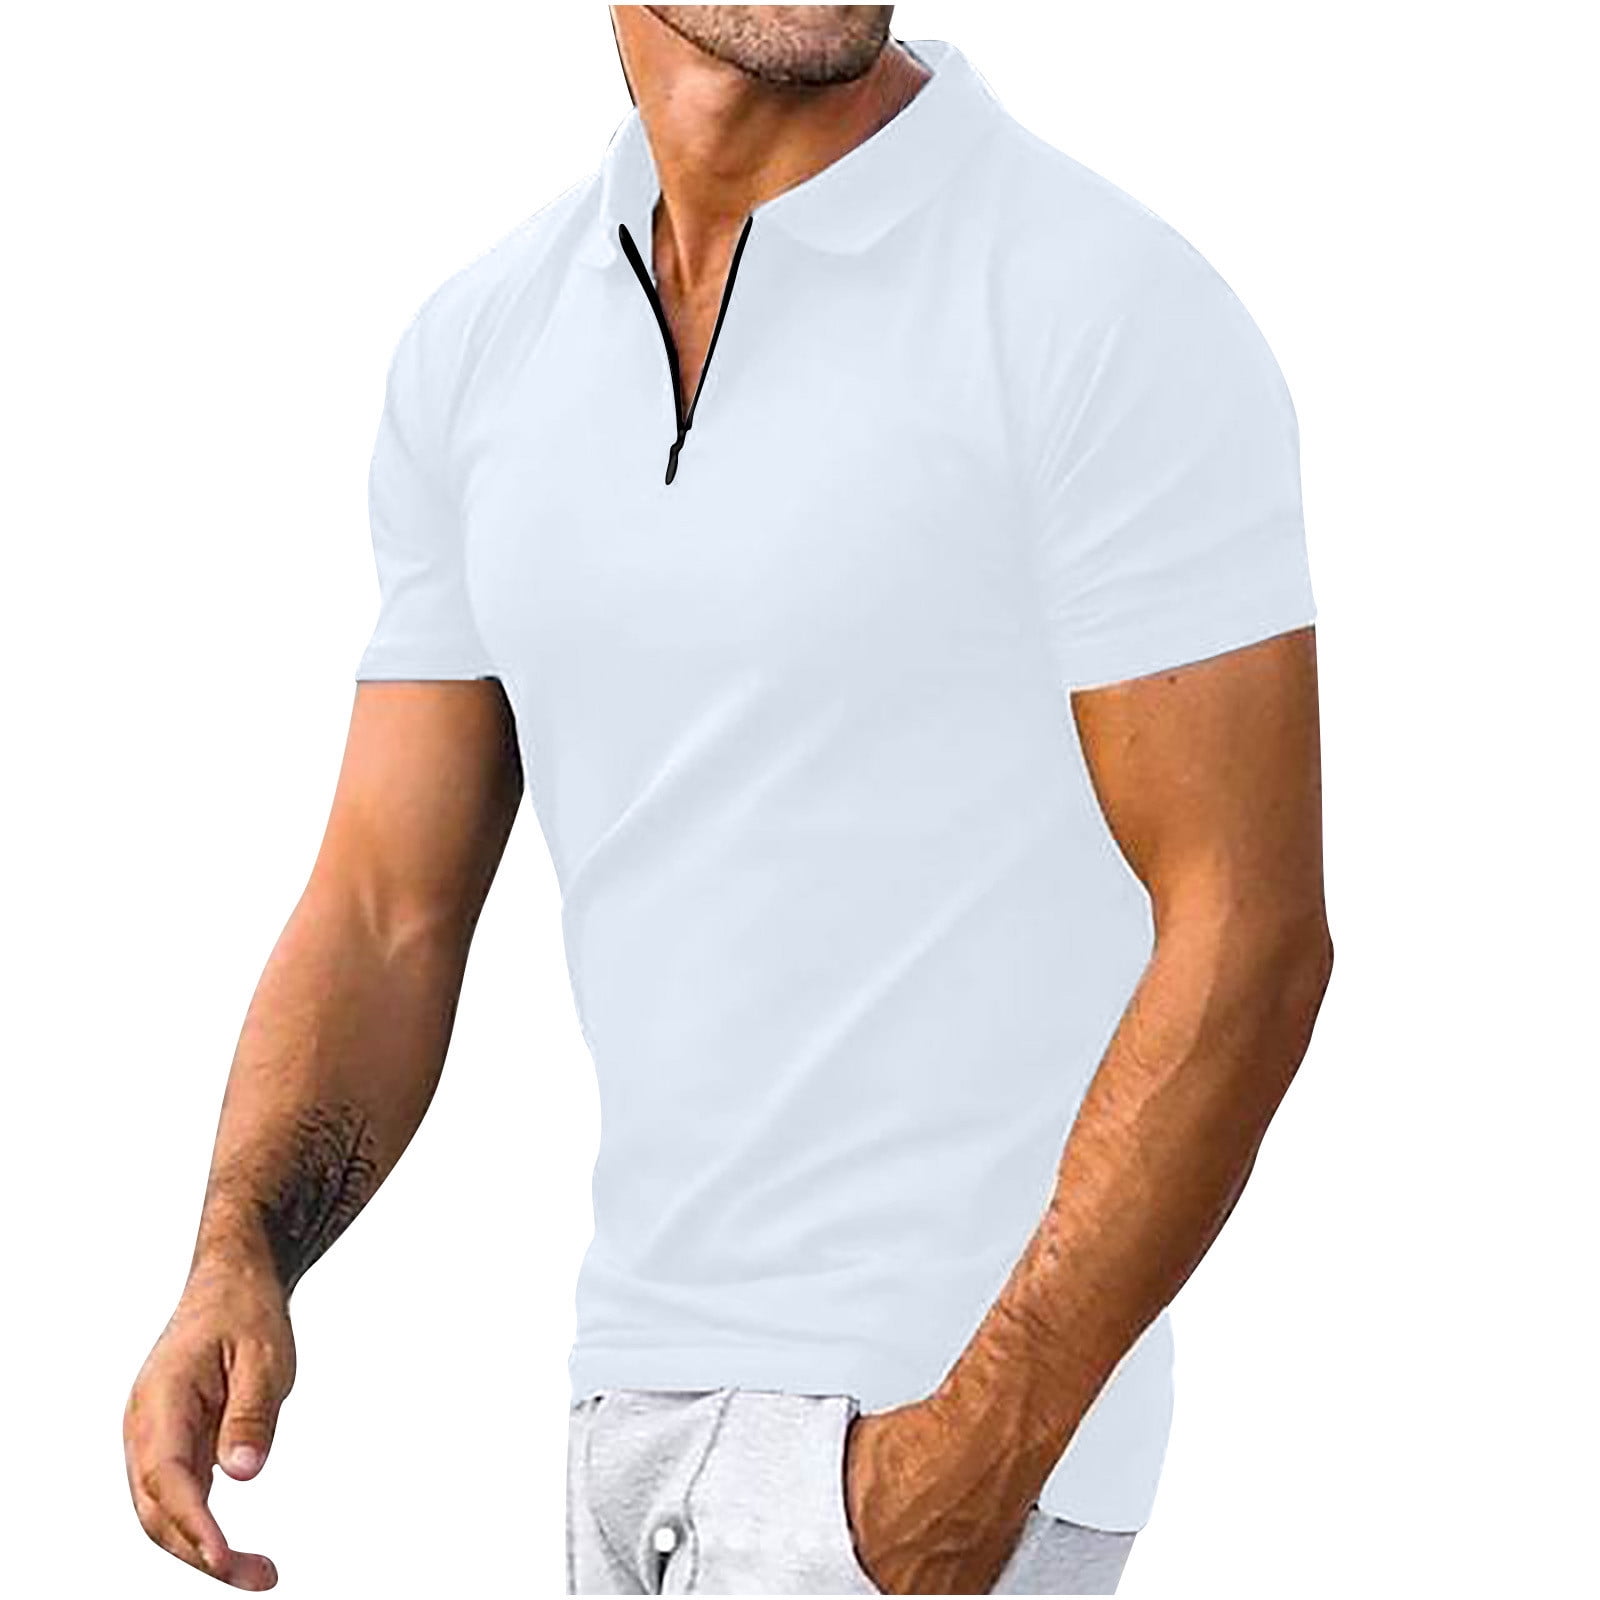 Huk Fishing Shirts For Men Men's Summer Cotton Linen Solid Color Casual Sleeveless  Shirt Workout Shirts For Men,Light blue,3XL 